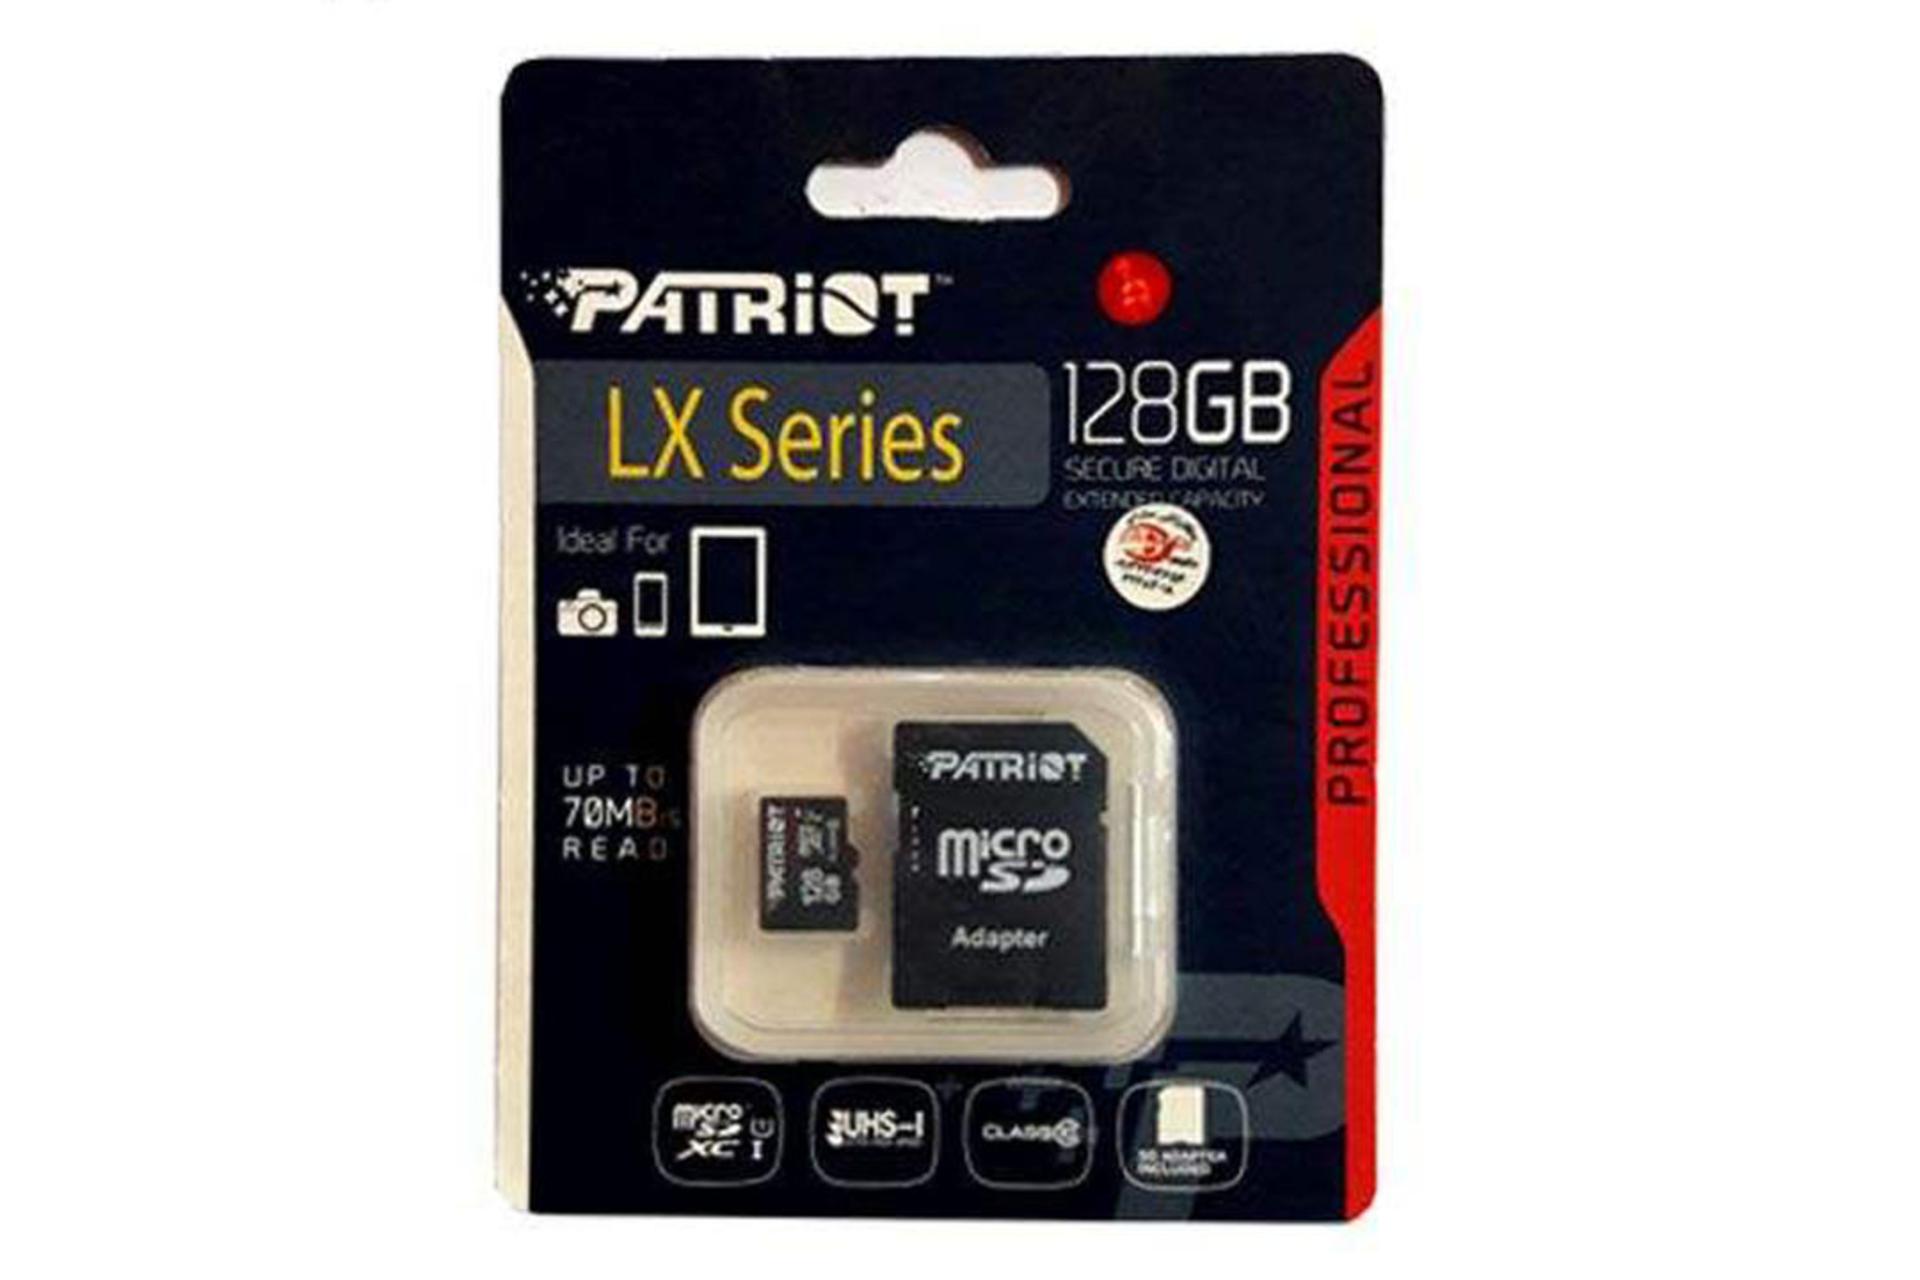 Patriot LX Series microSDHC Class 10 UHS-I U1 128GB